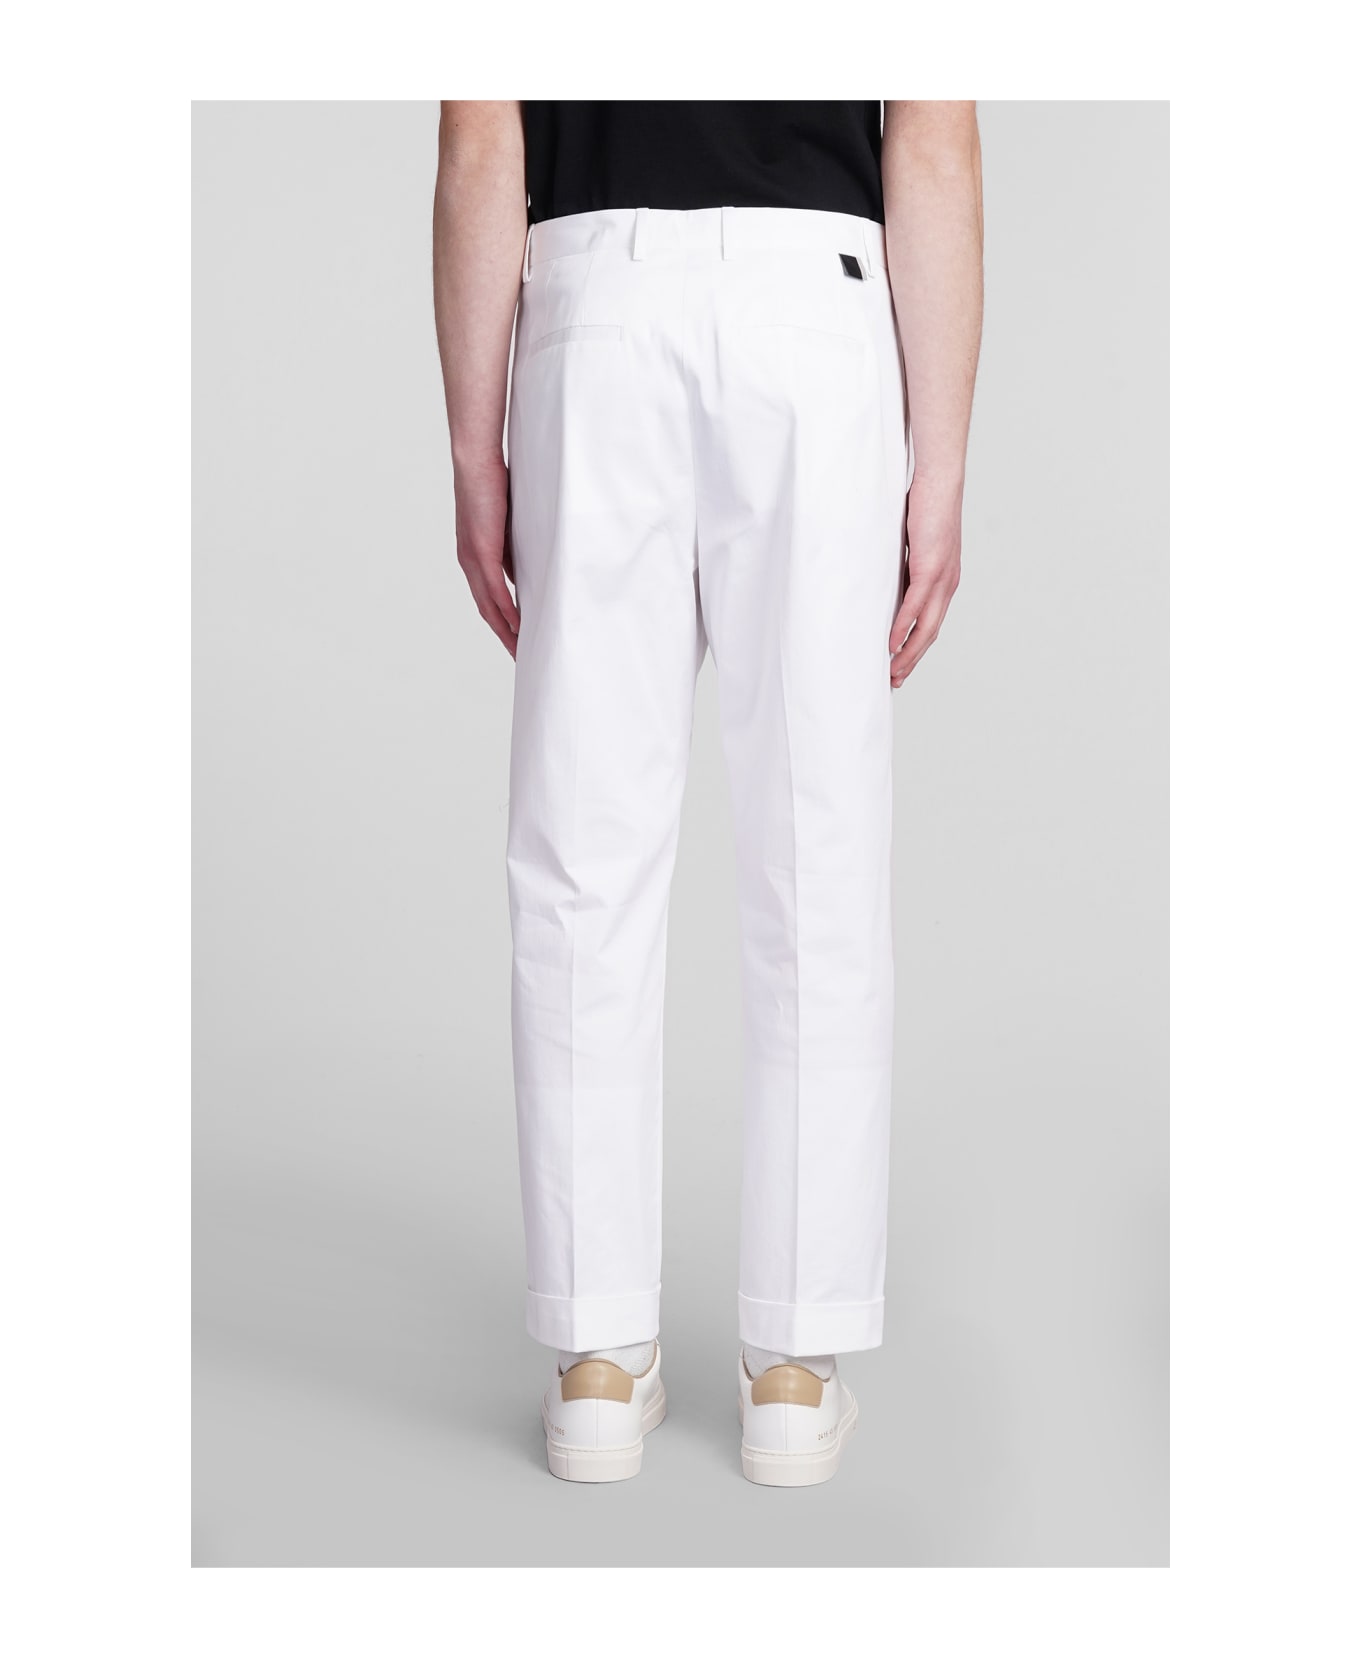 Low Brand Kim Pants In White Cotton - white